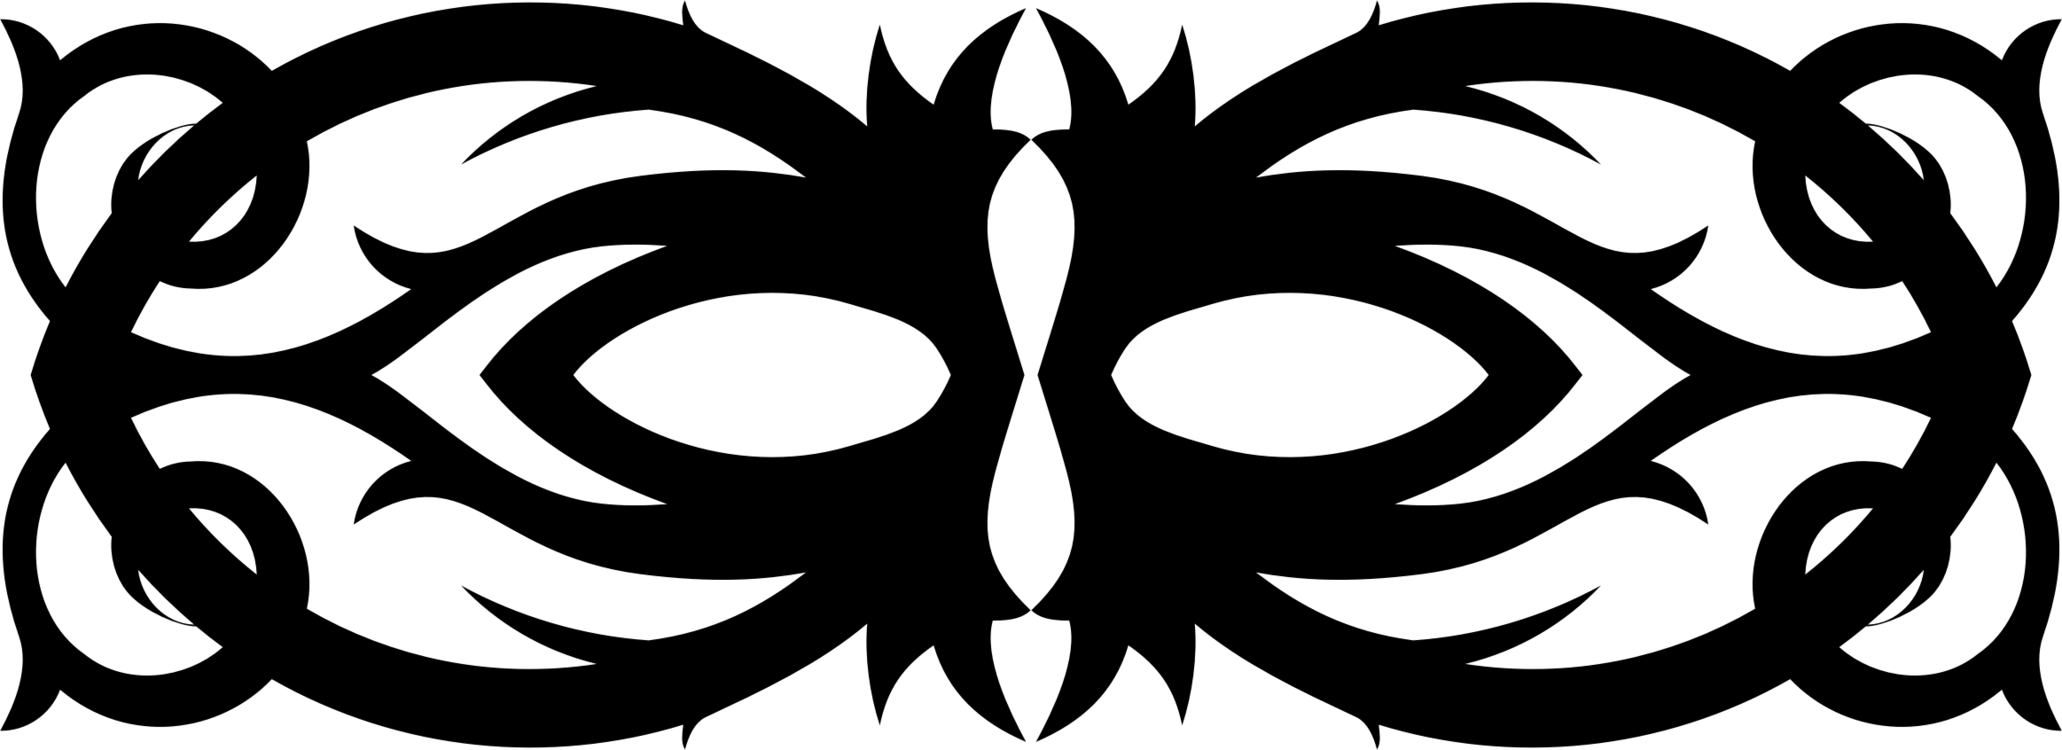 Symmetry,Blackandwhite,Logo